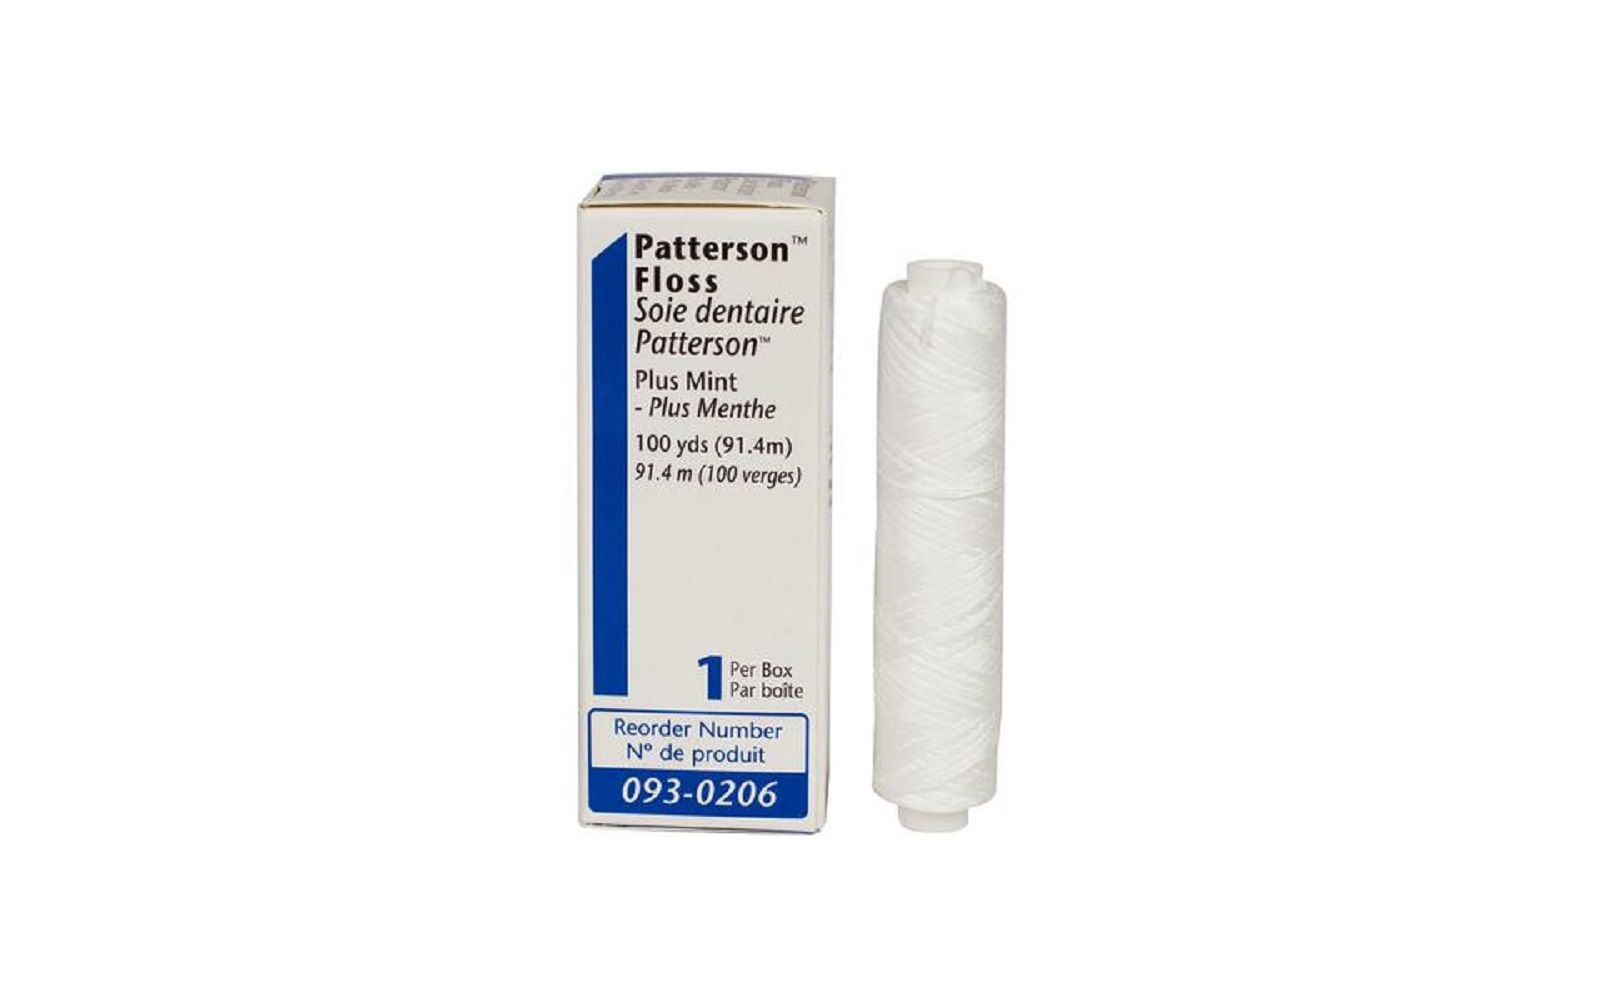 Patterson® floss plus – 100 yd refill spool, mint